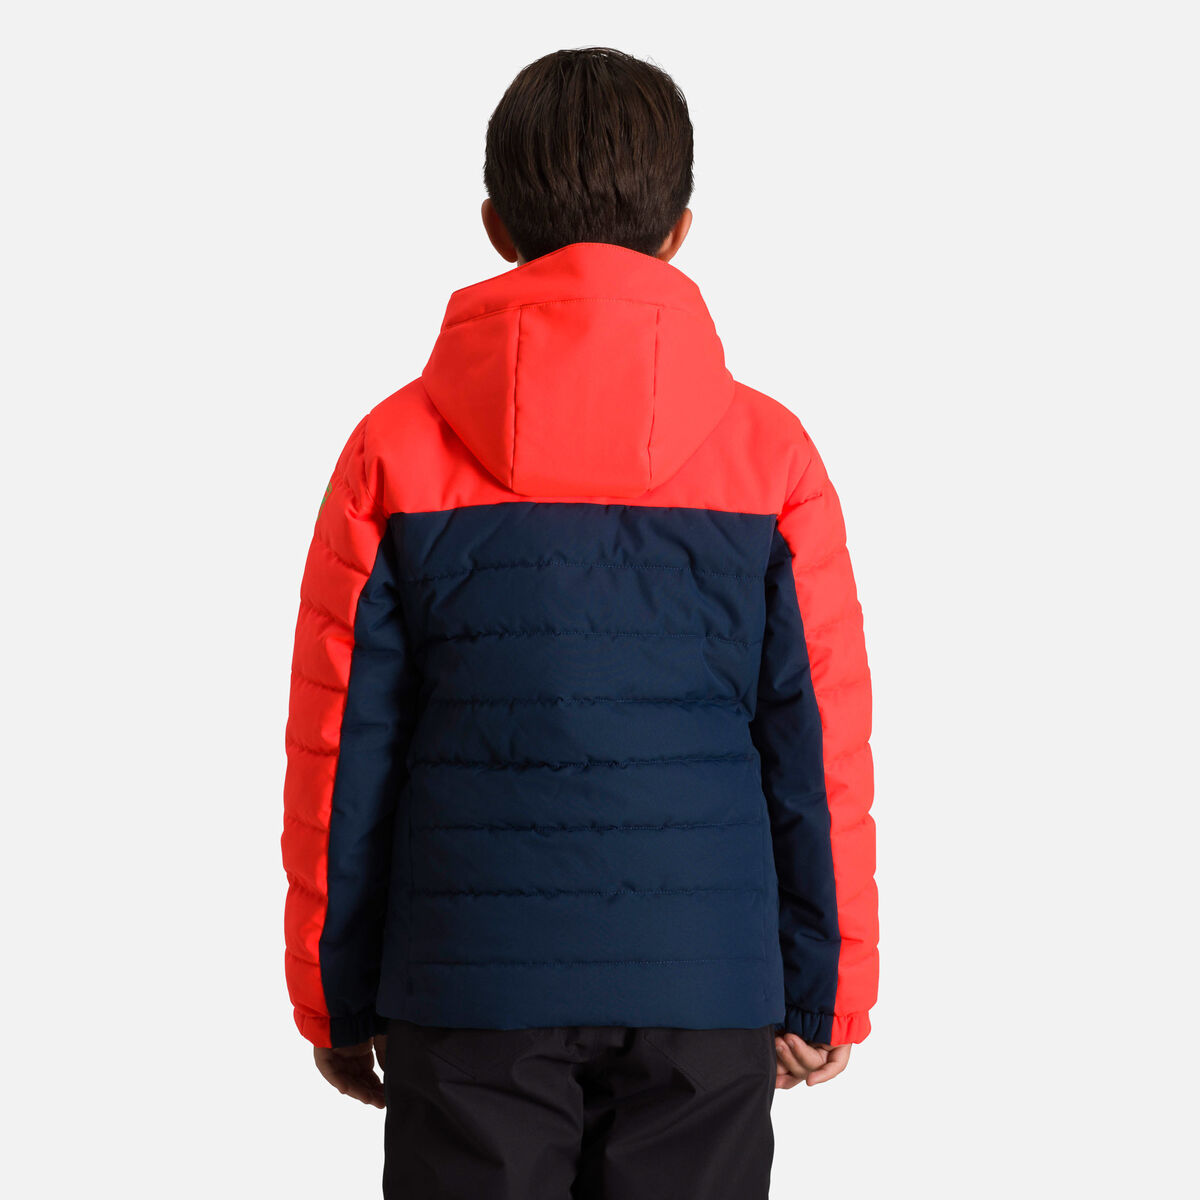 Boys' Polydown Hero ski jacket